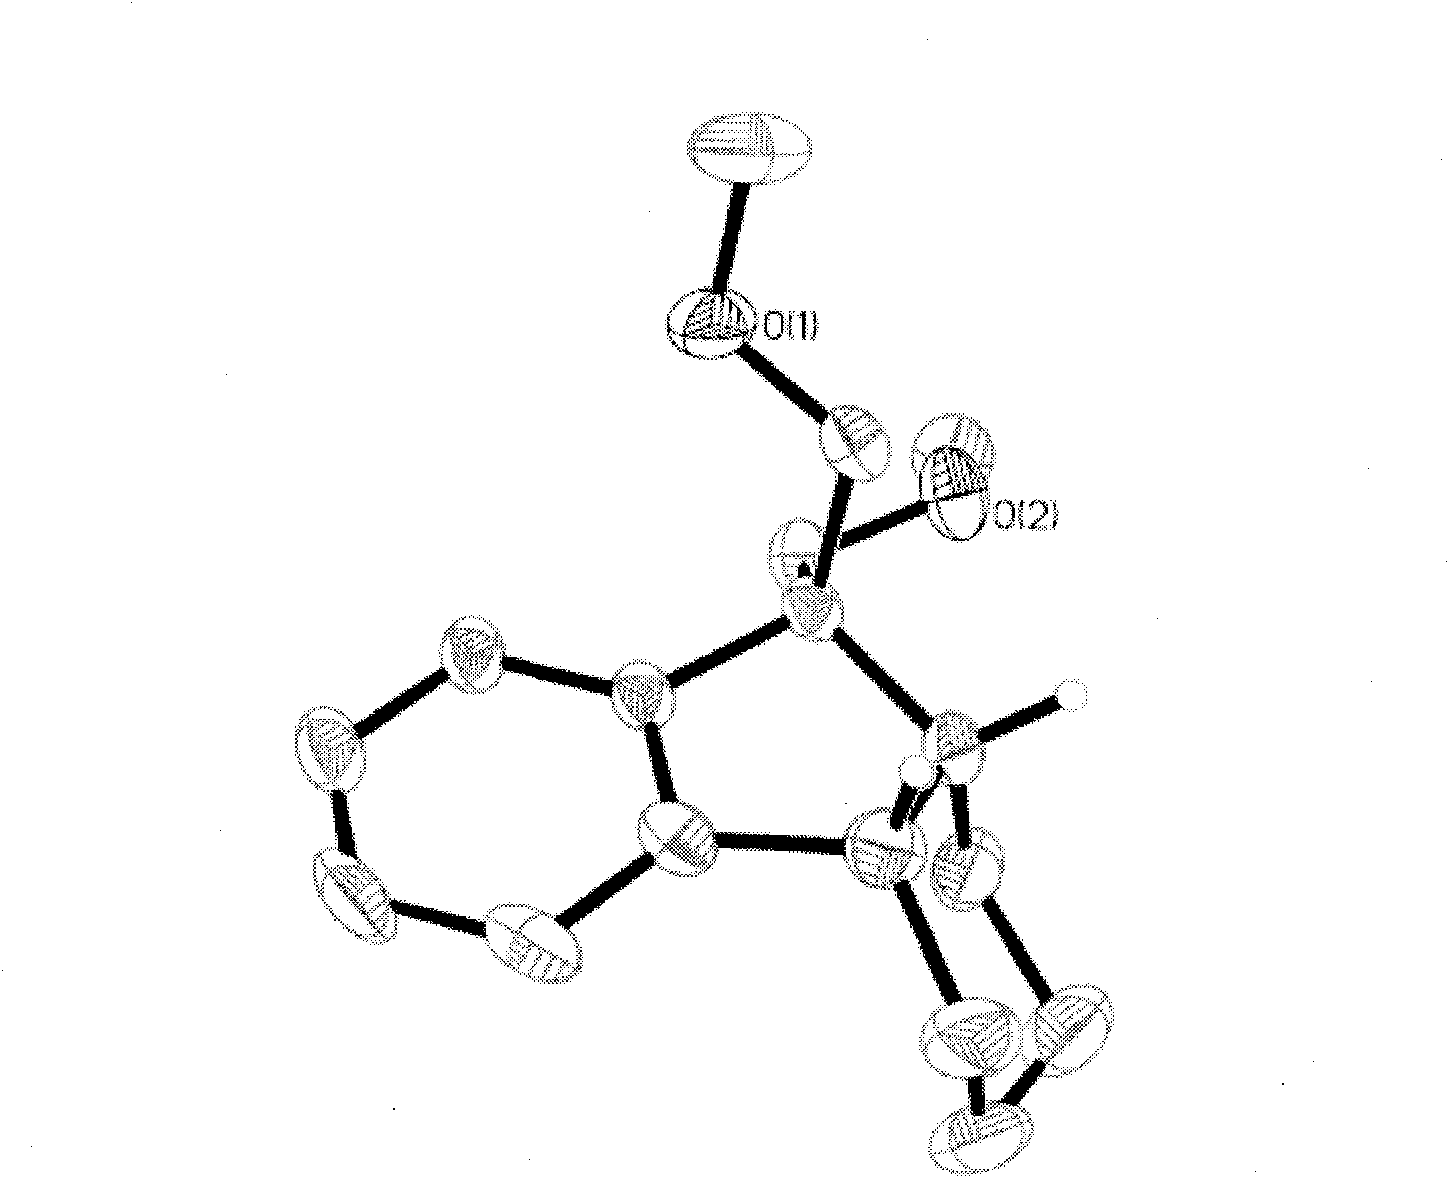 Method for selective catalytic hydrogenation for 9,9-bi(methoxymethylated) fluorine (BMMF)